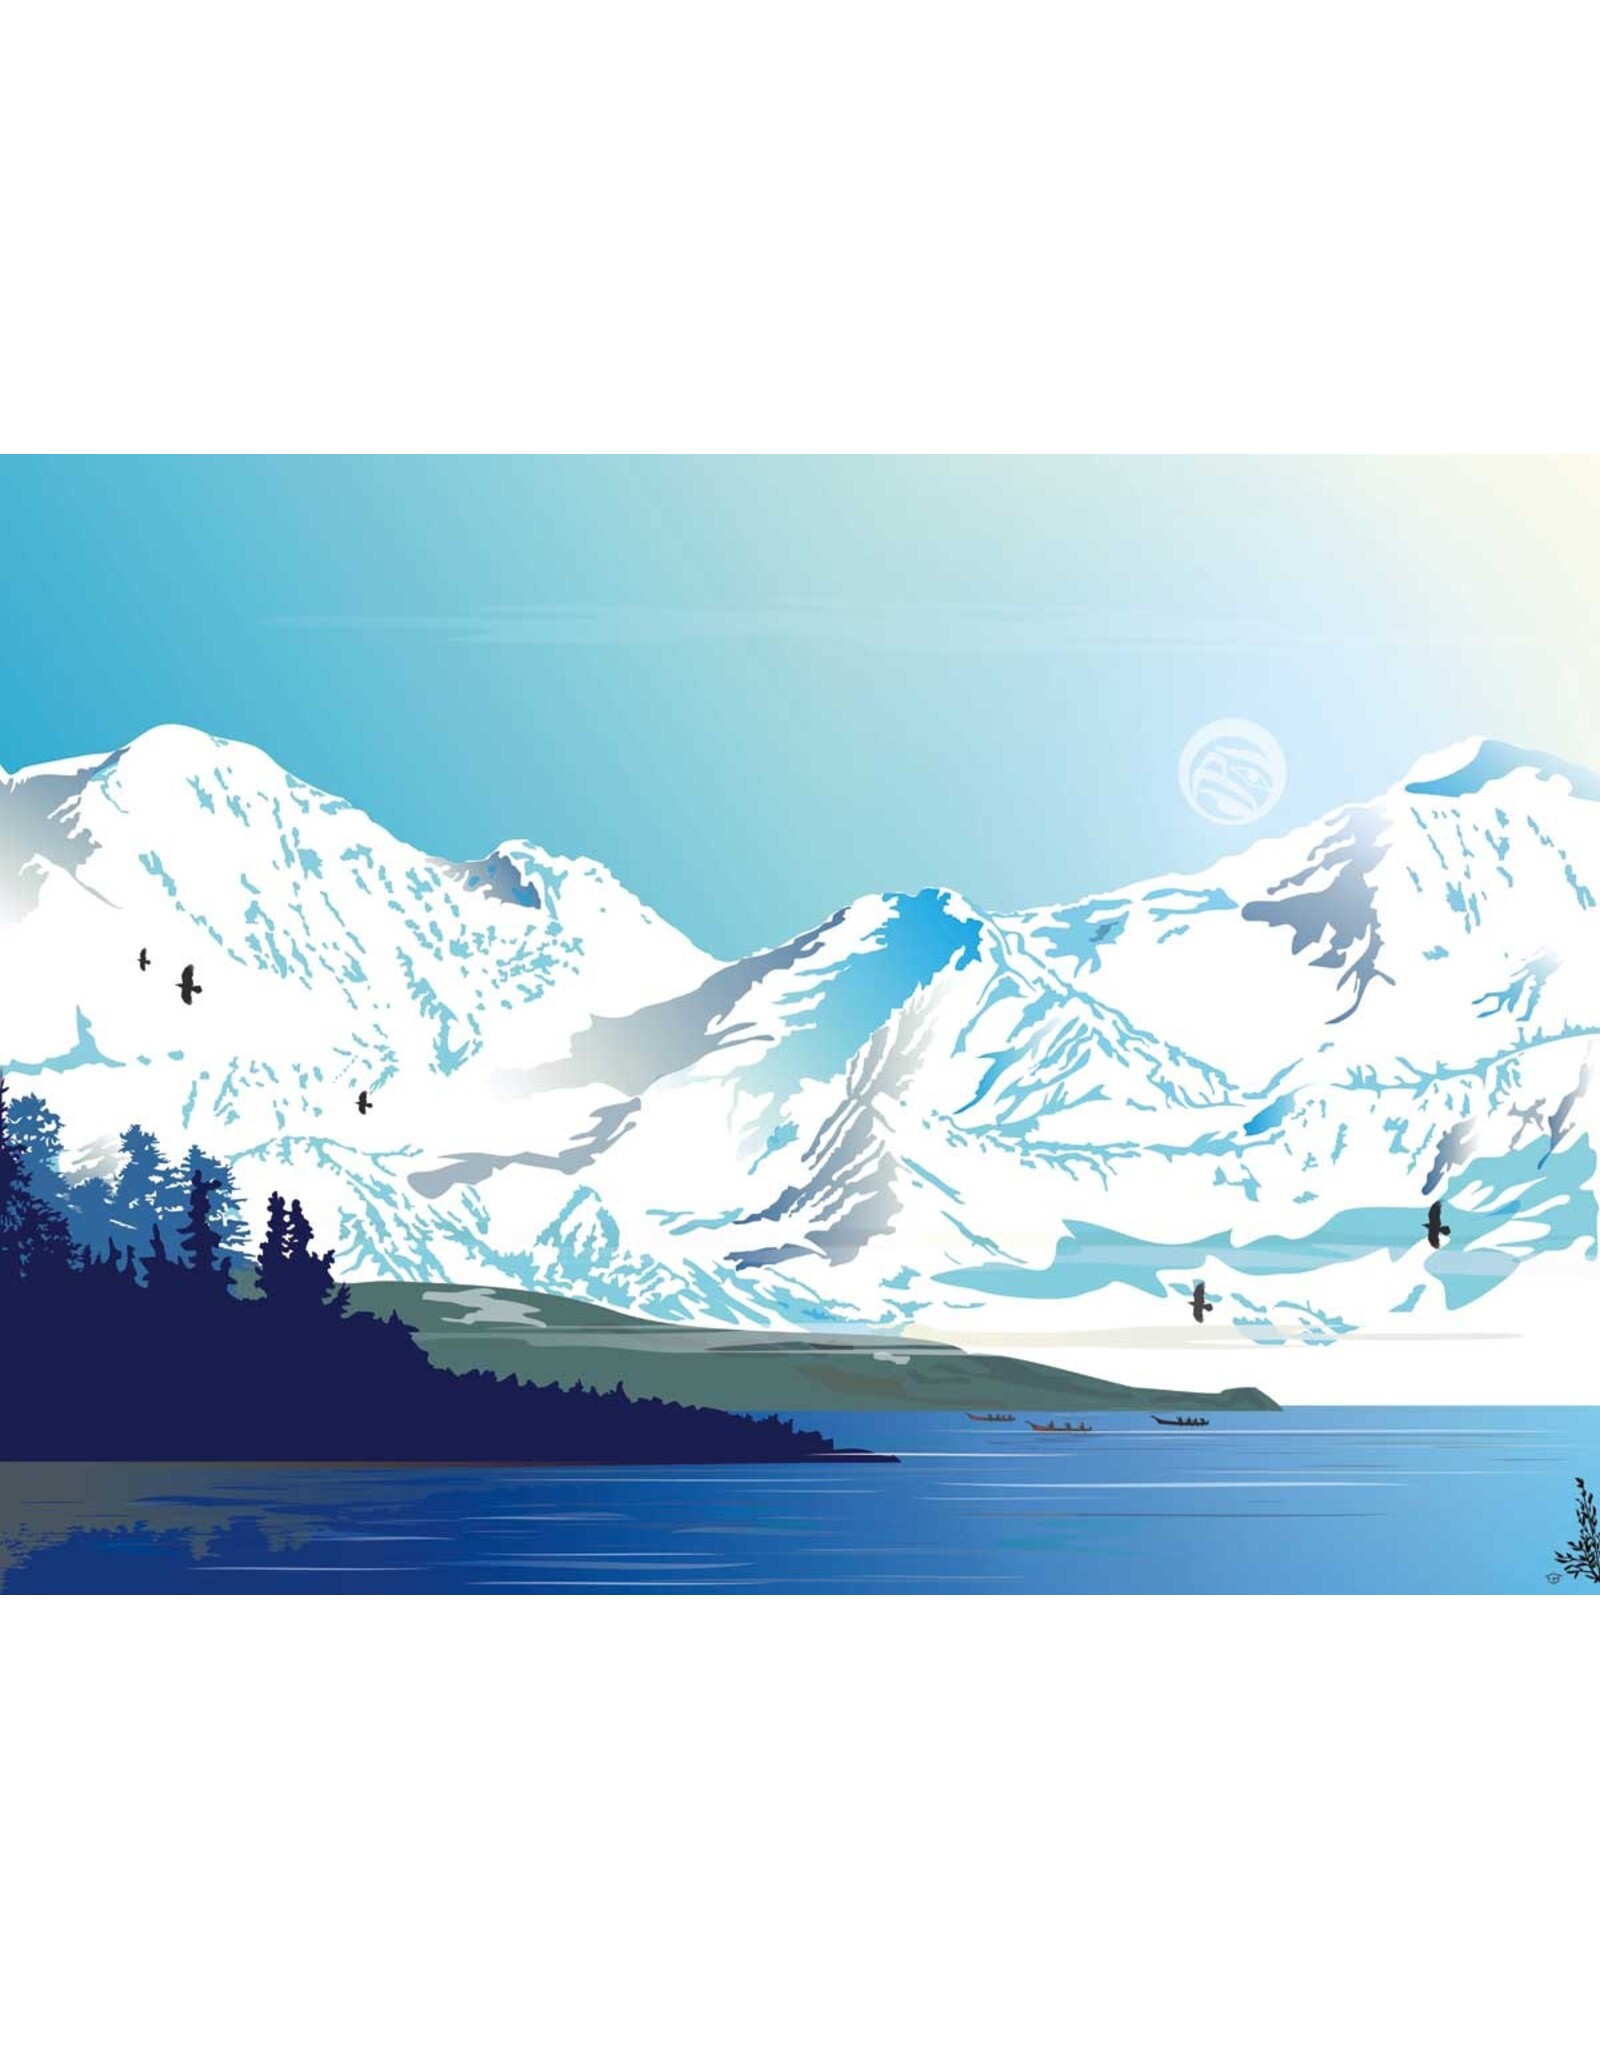 Tlingit Winter Journey by Mark Preston Small Canvas